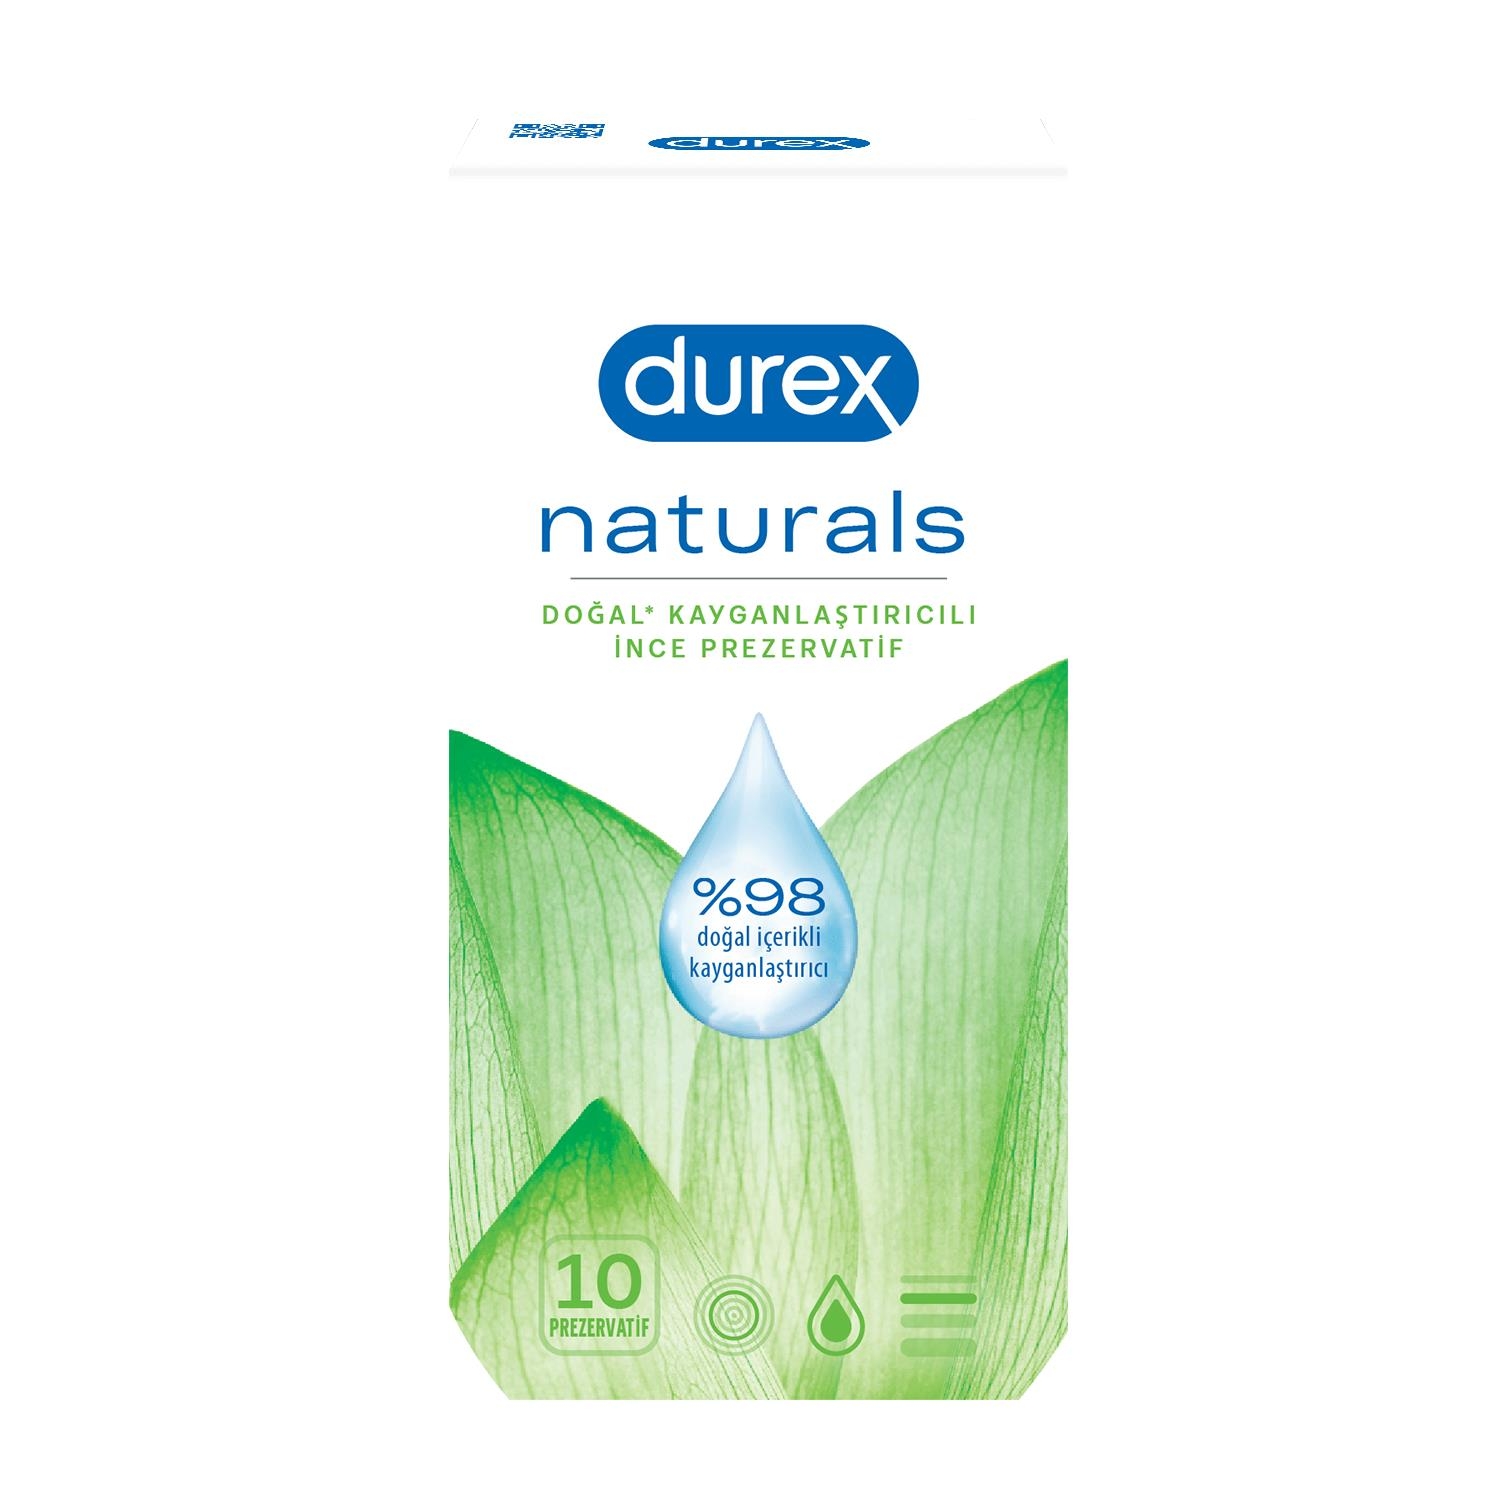 Durex Naturals 10lu Prezervatif - 1